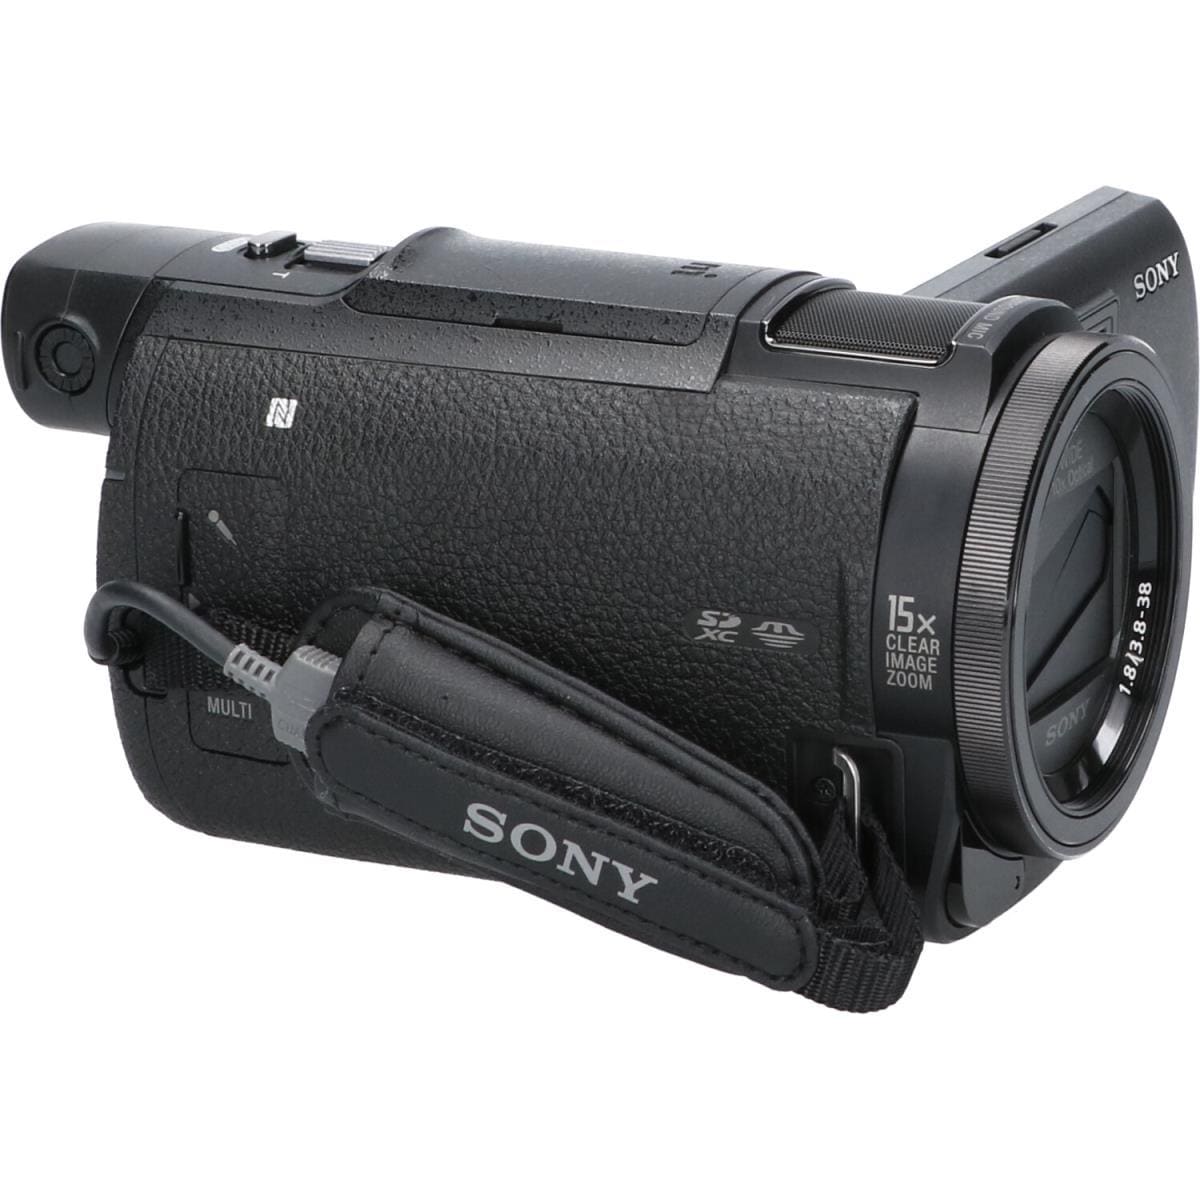 SONY ビデオカメラ HDR-CX670 9.2MEGA PIXEL - ビデオカメラ